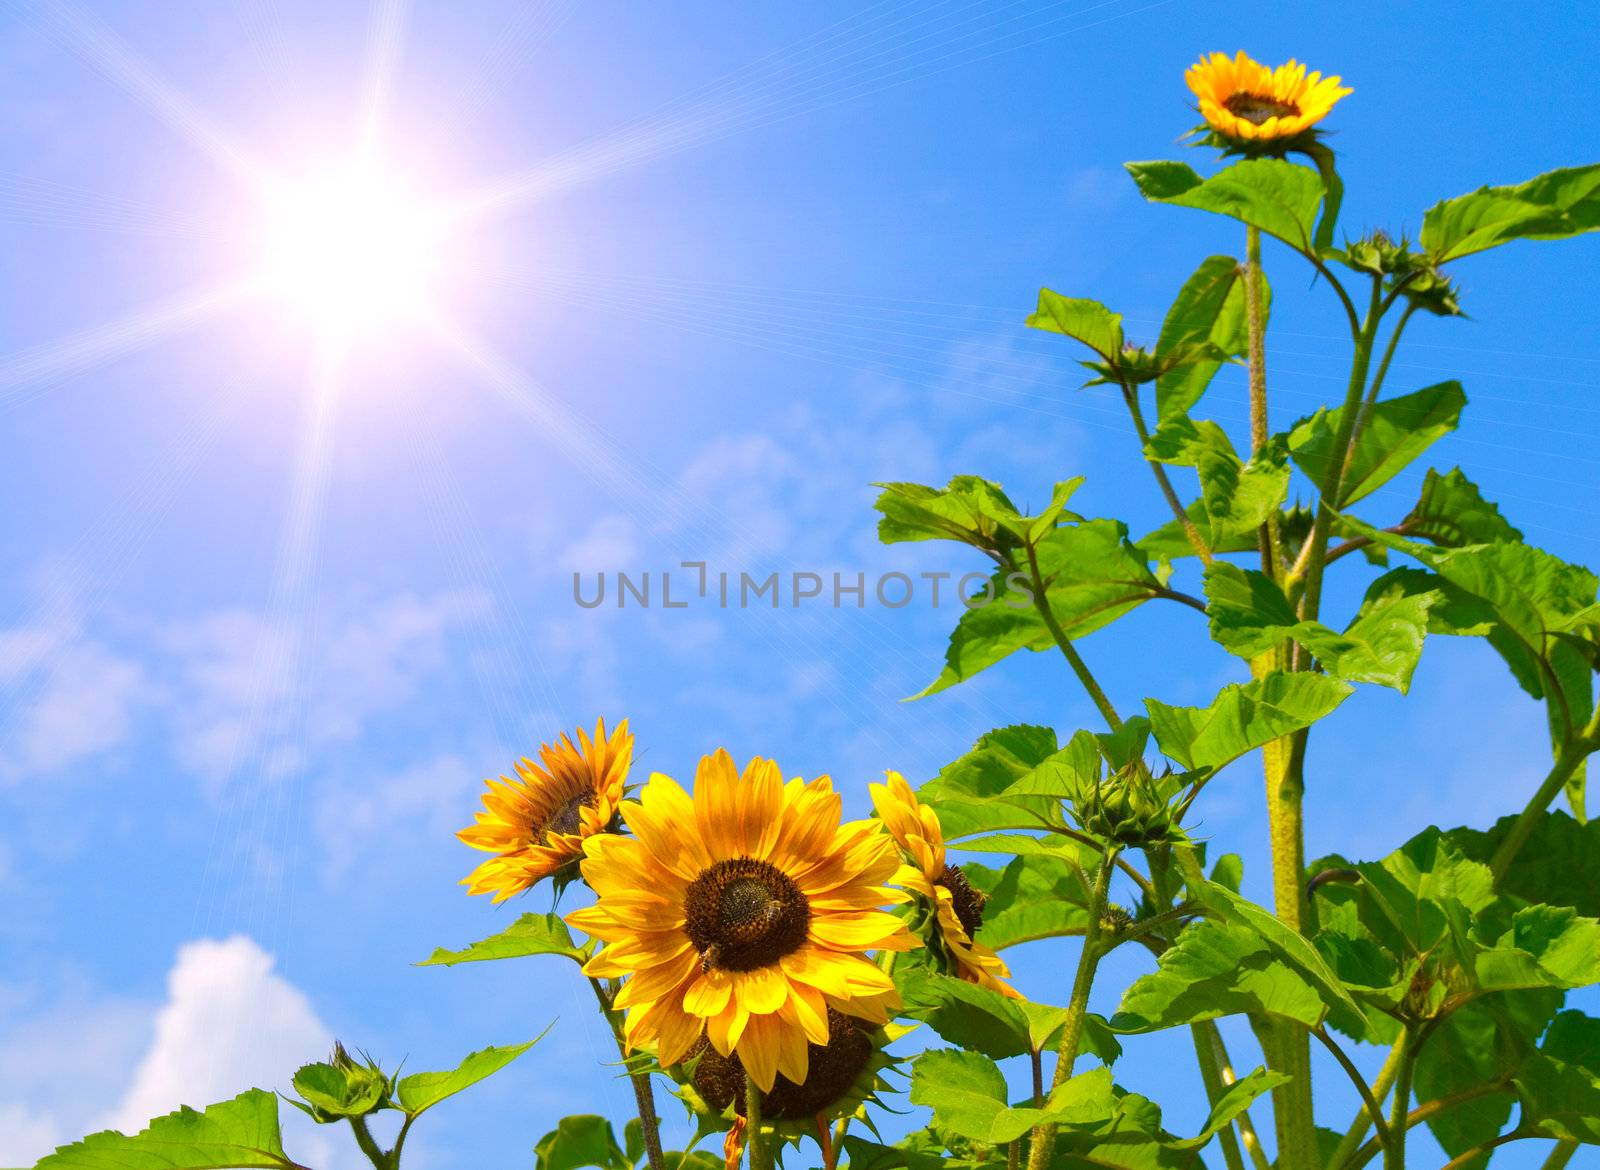 sunflowers on blue sky with sun